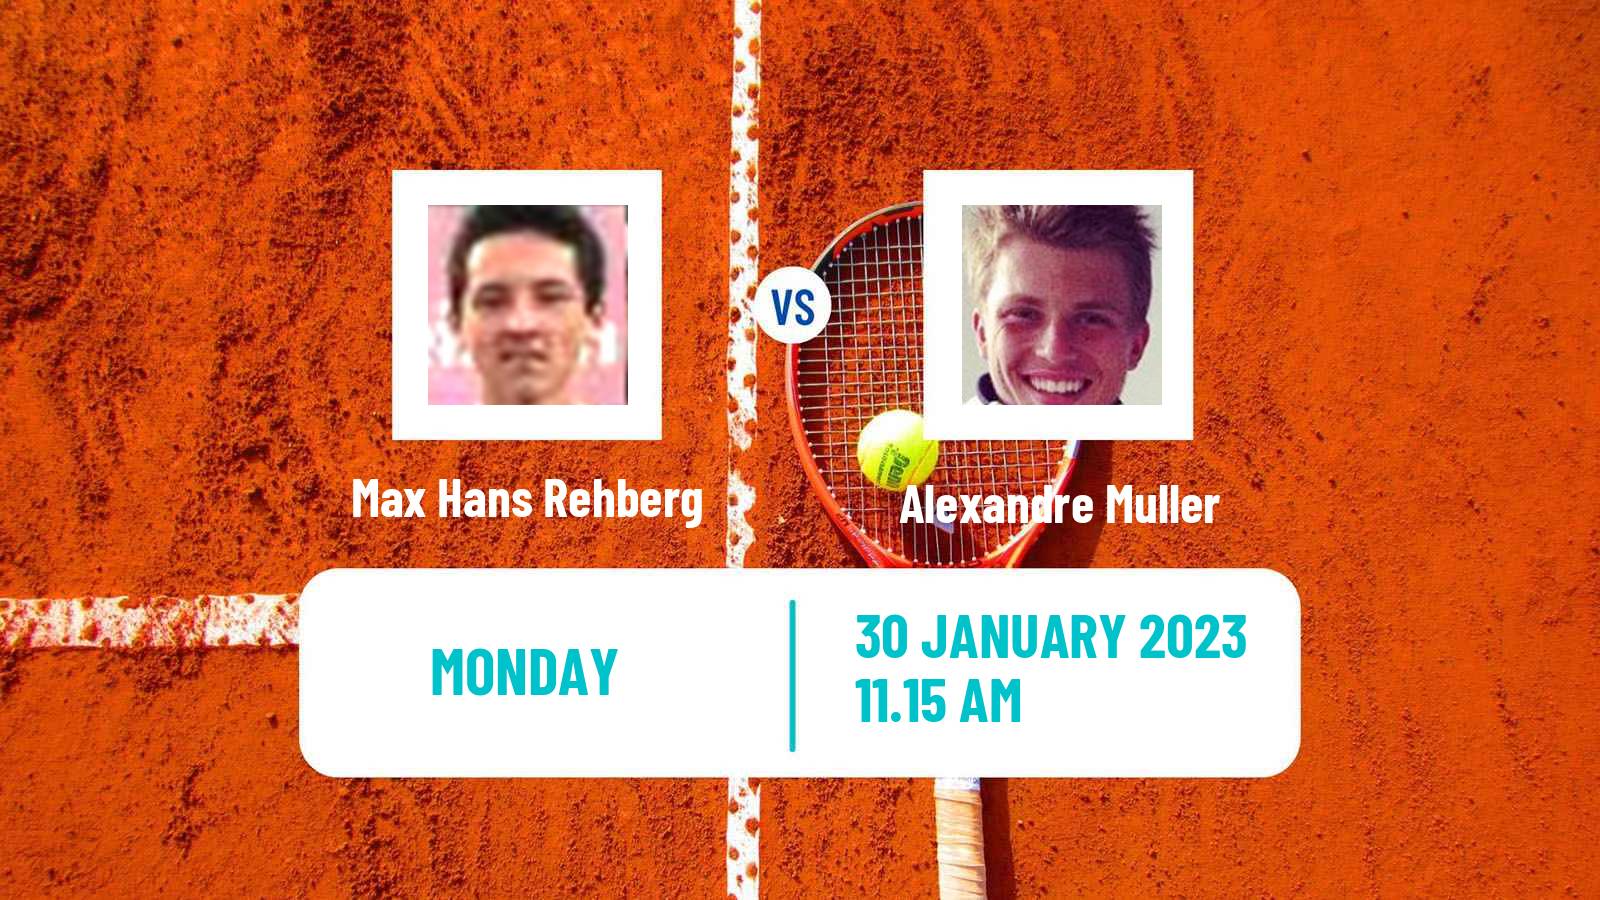 Tennis ATP Challenger Max Hans Rehberg - Alexandre Muller